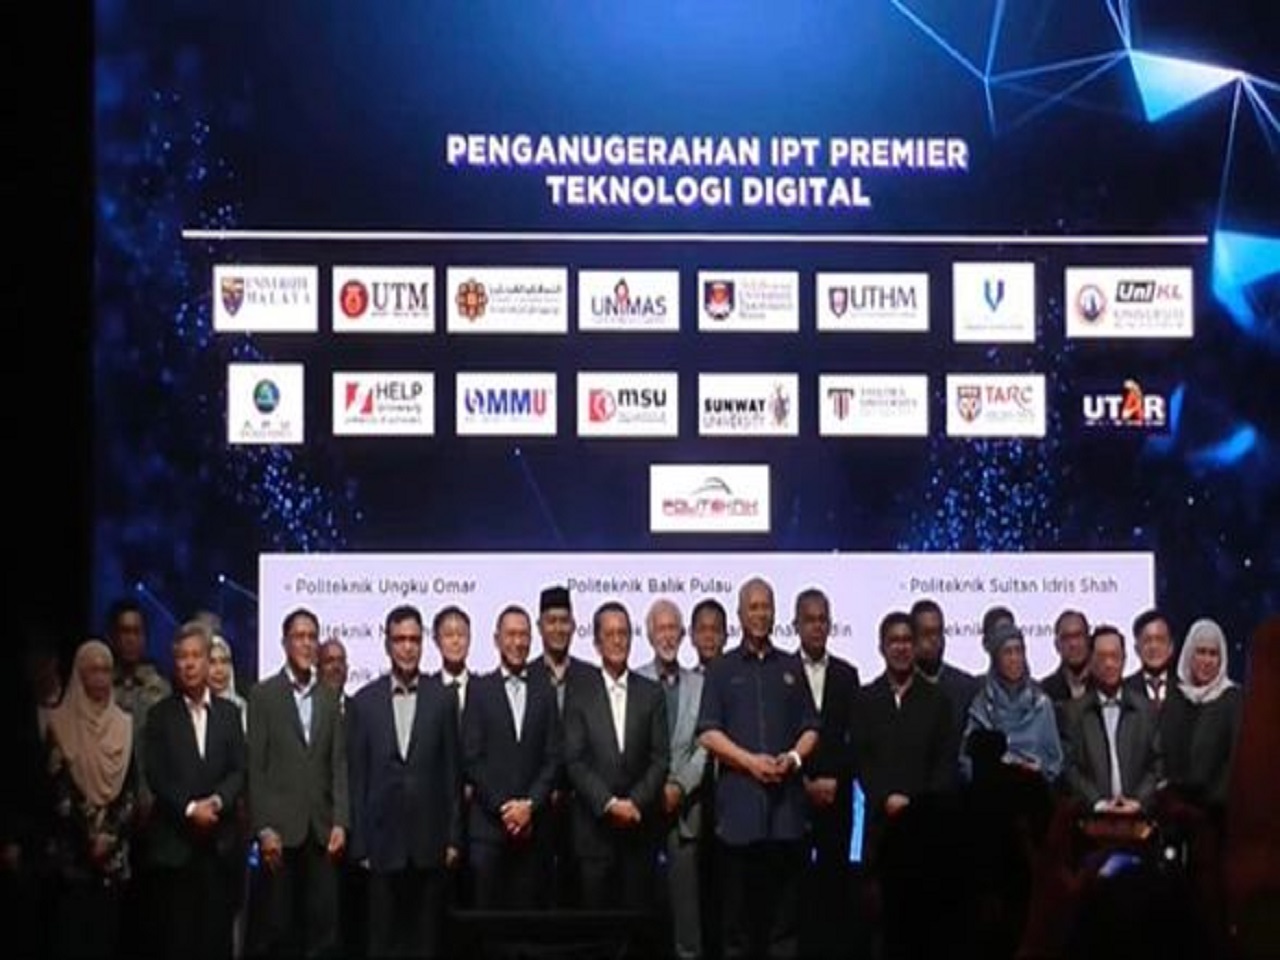 FSKTM di iktiraf sebagai Premier Digital Technology Institution (PDTI) oleh Malaysia Digital Economic Corporation (MDEC)